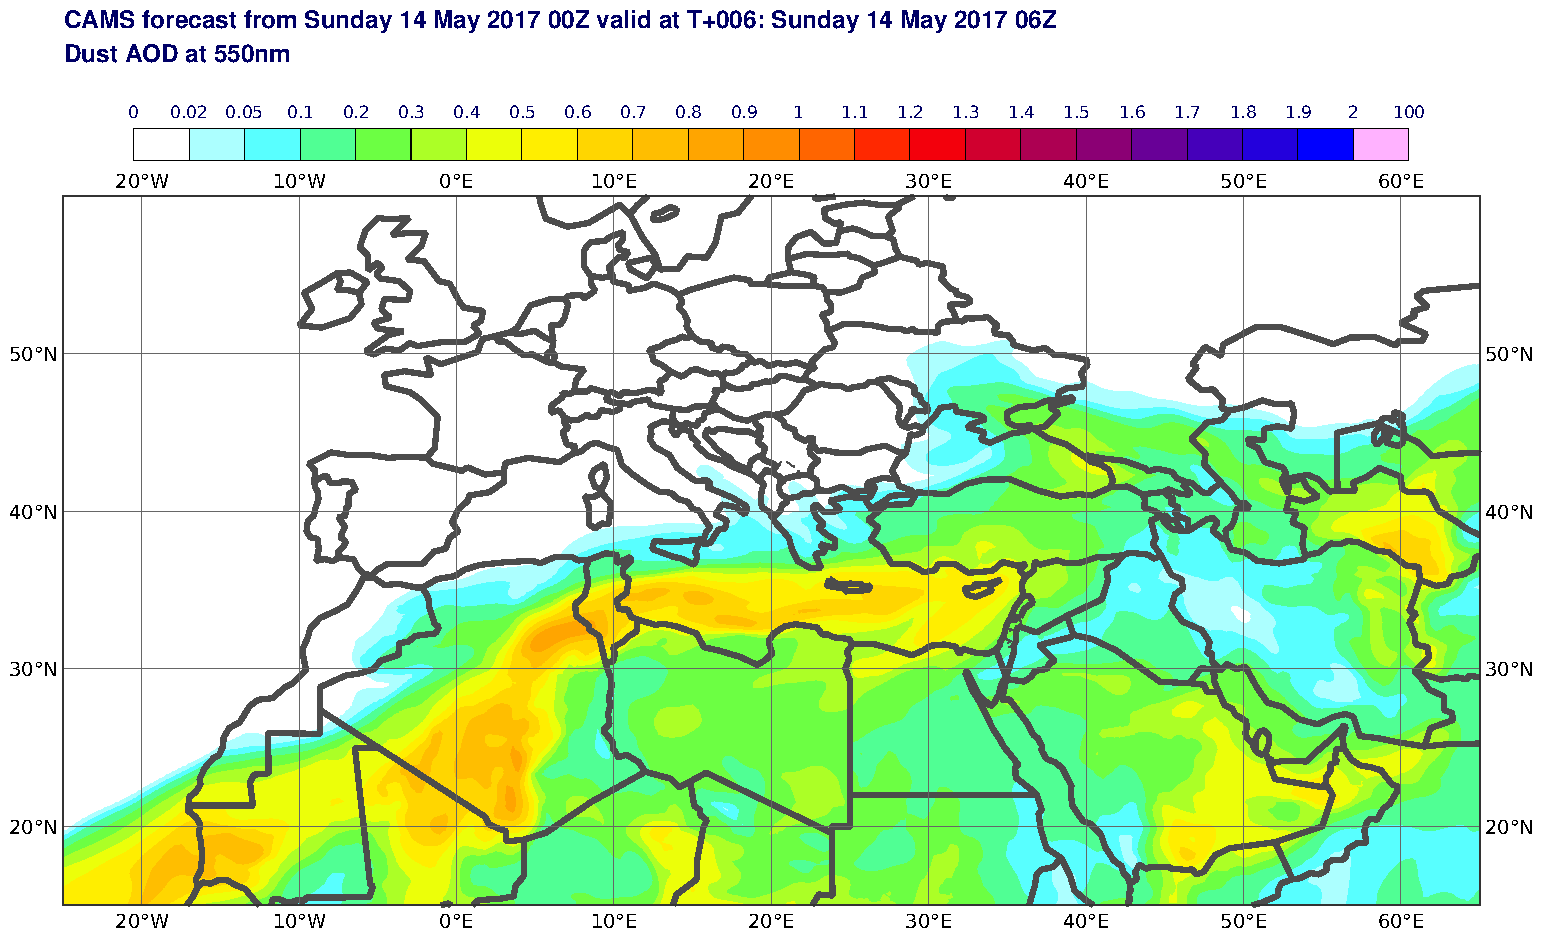 Dust AOD at 550nm valid at T6 - 2017-05-14 06:00